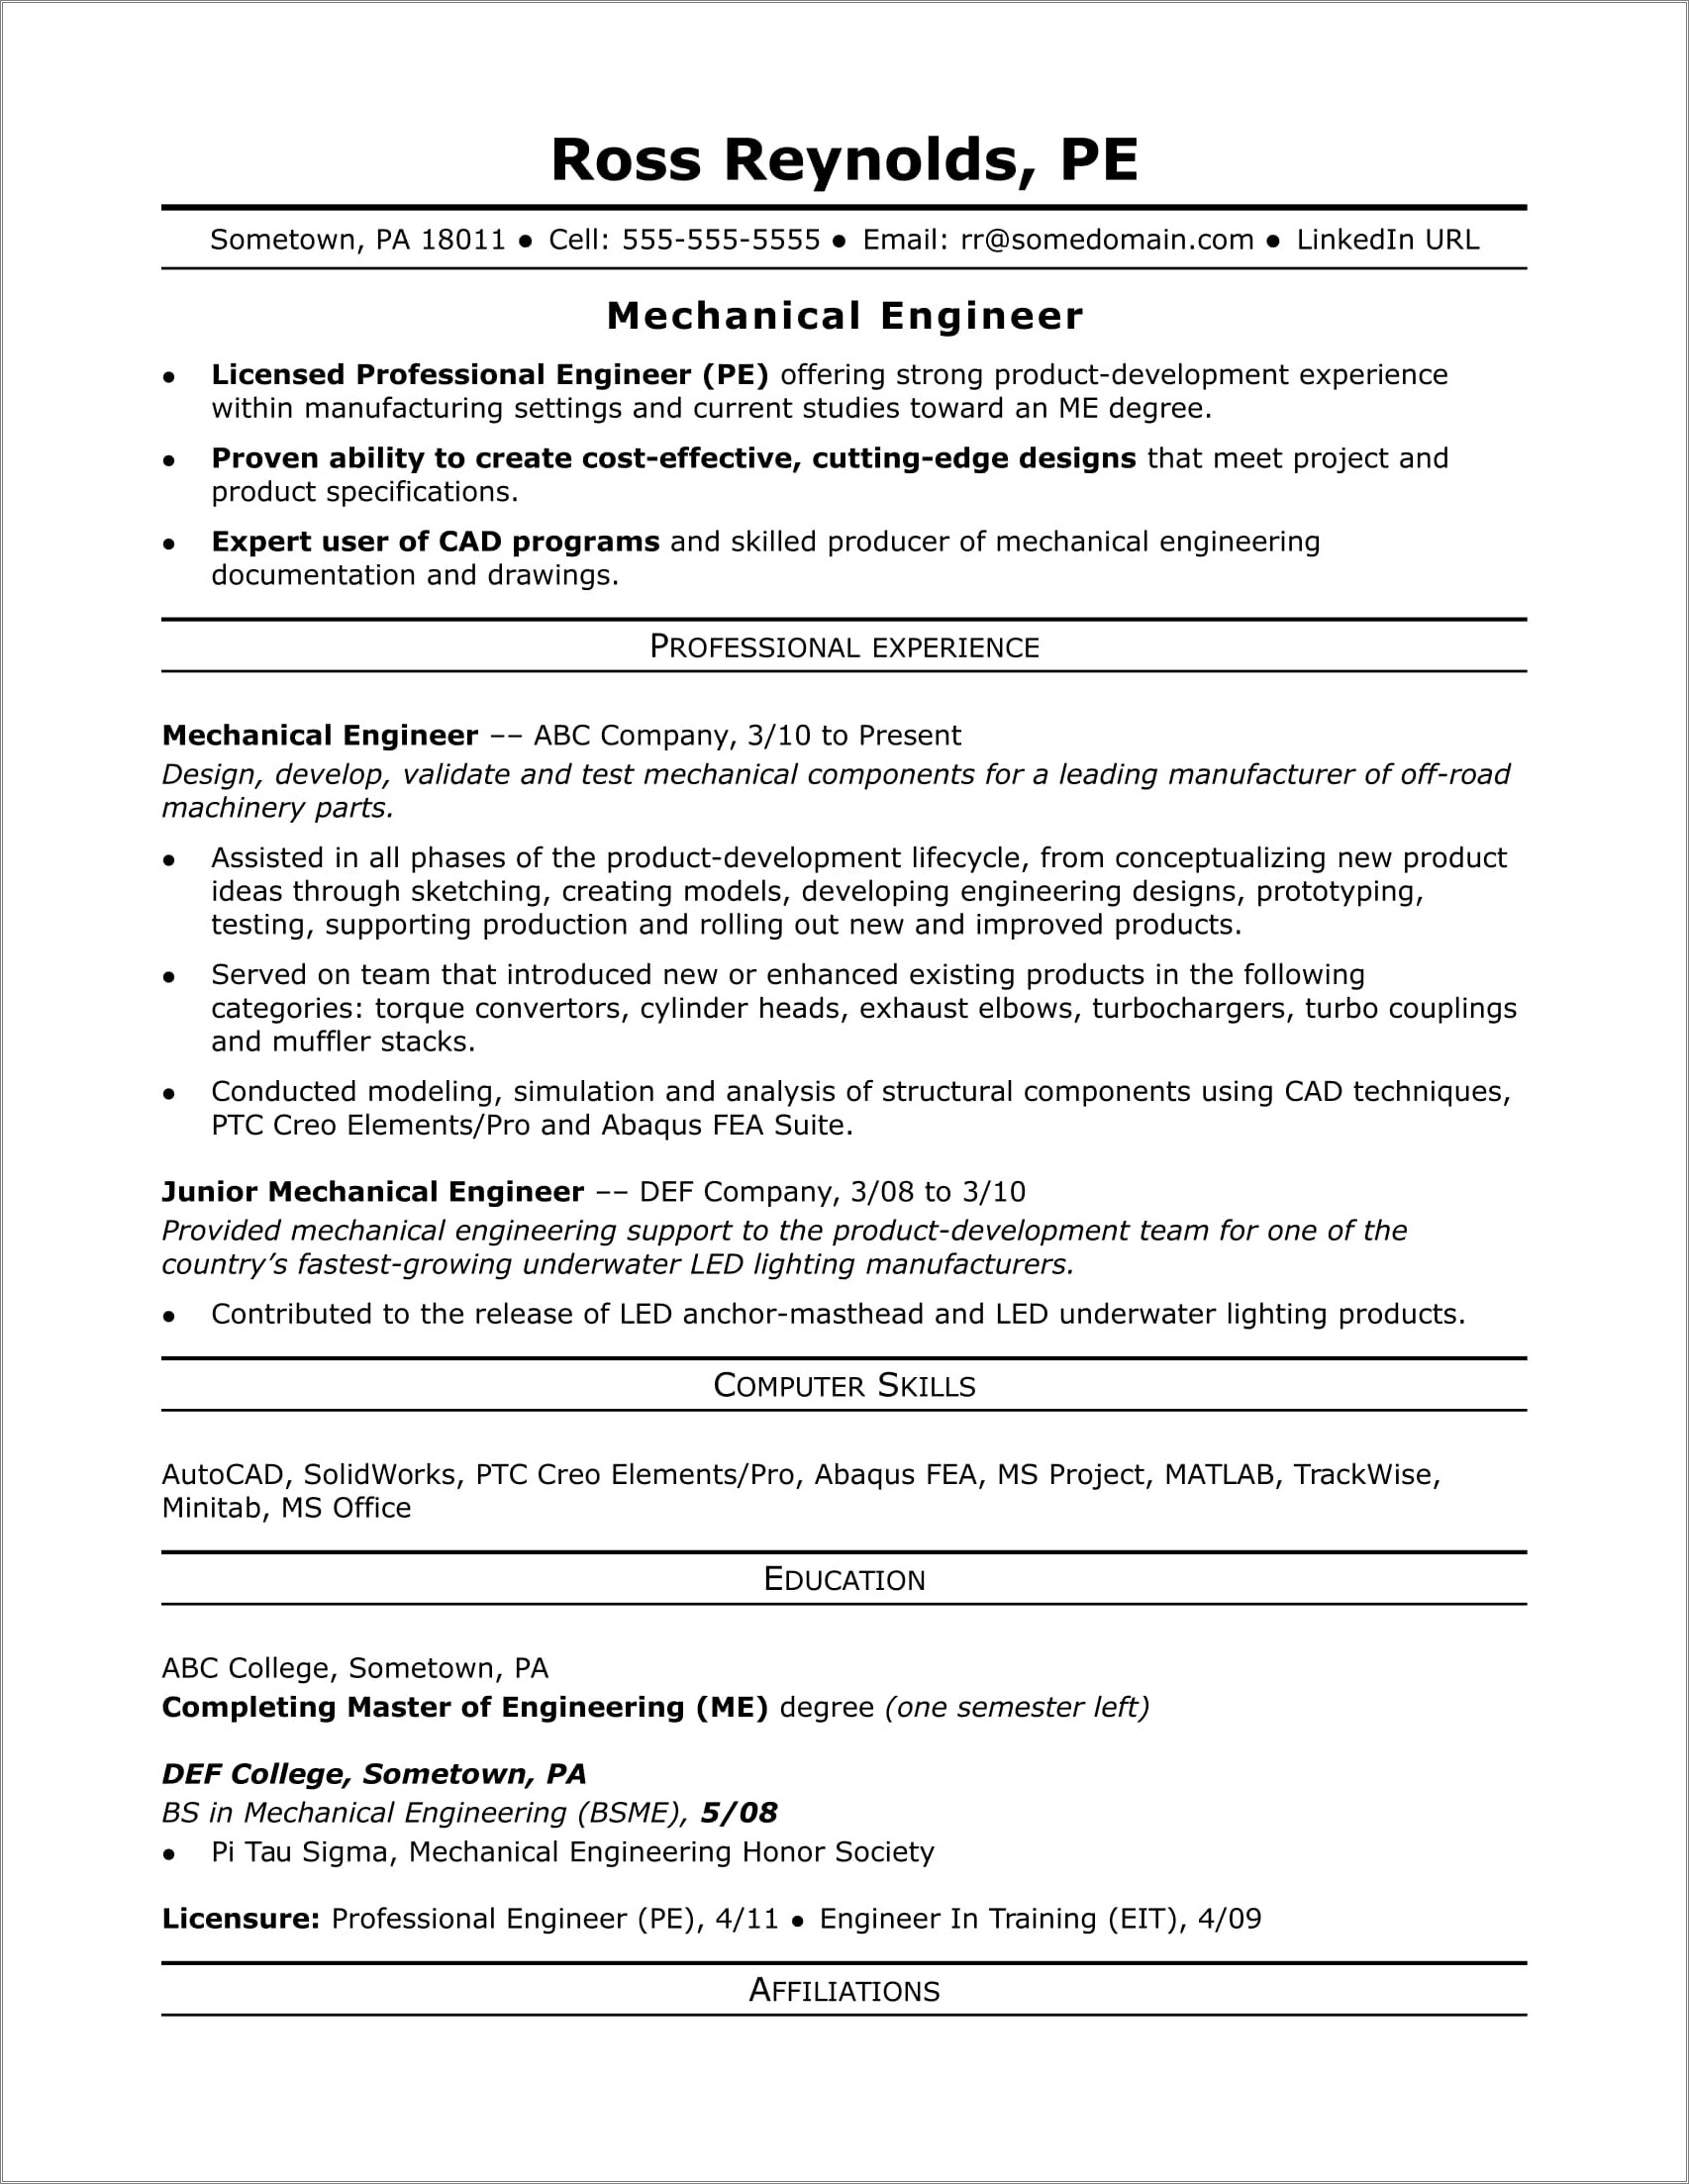 Engineer Resume With Minimal Work Experience